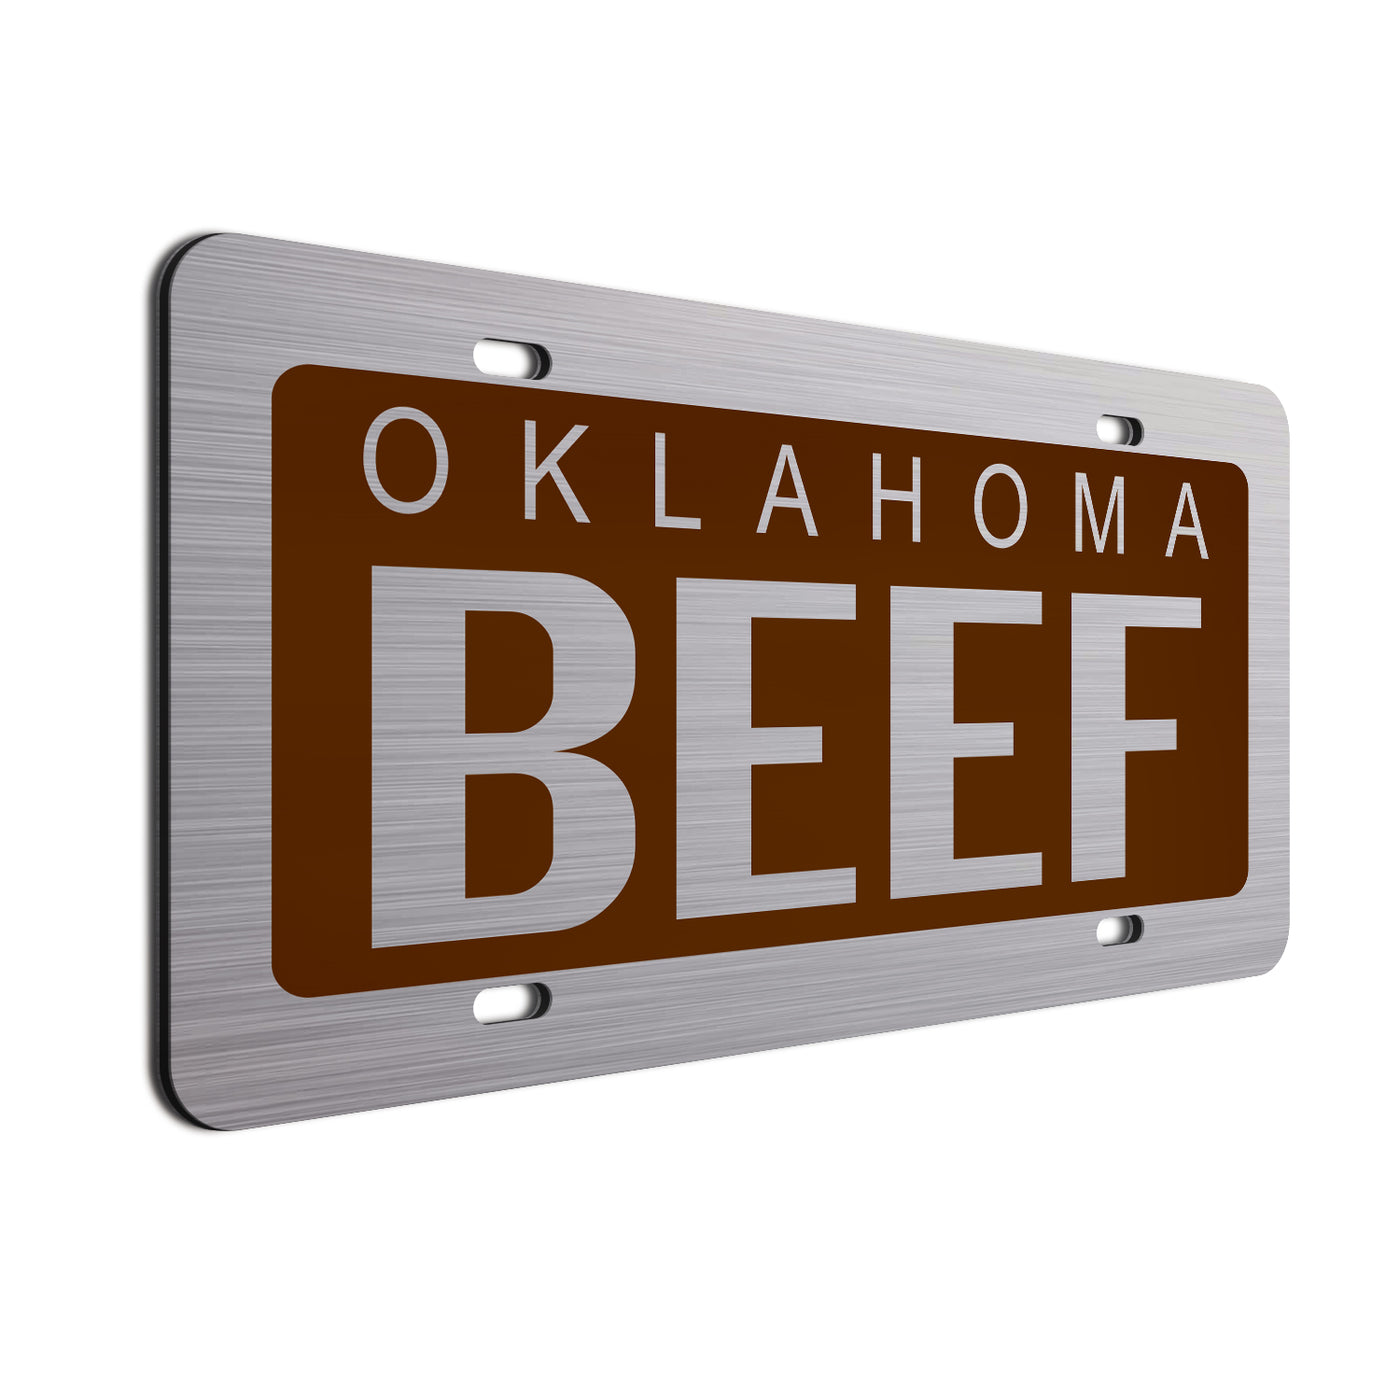  Oklahoma Beef Car License Plate Brown